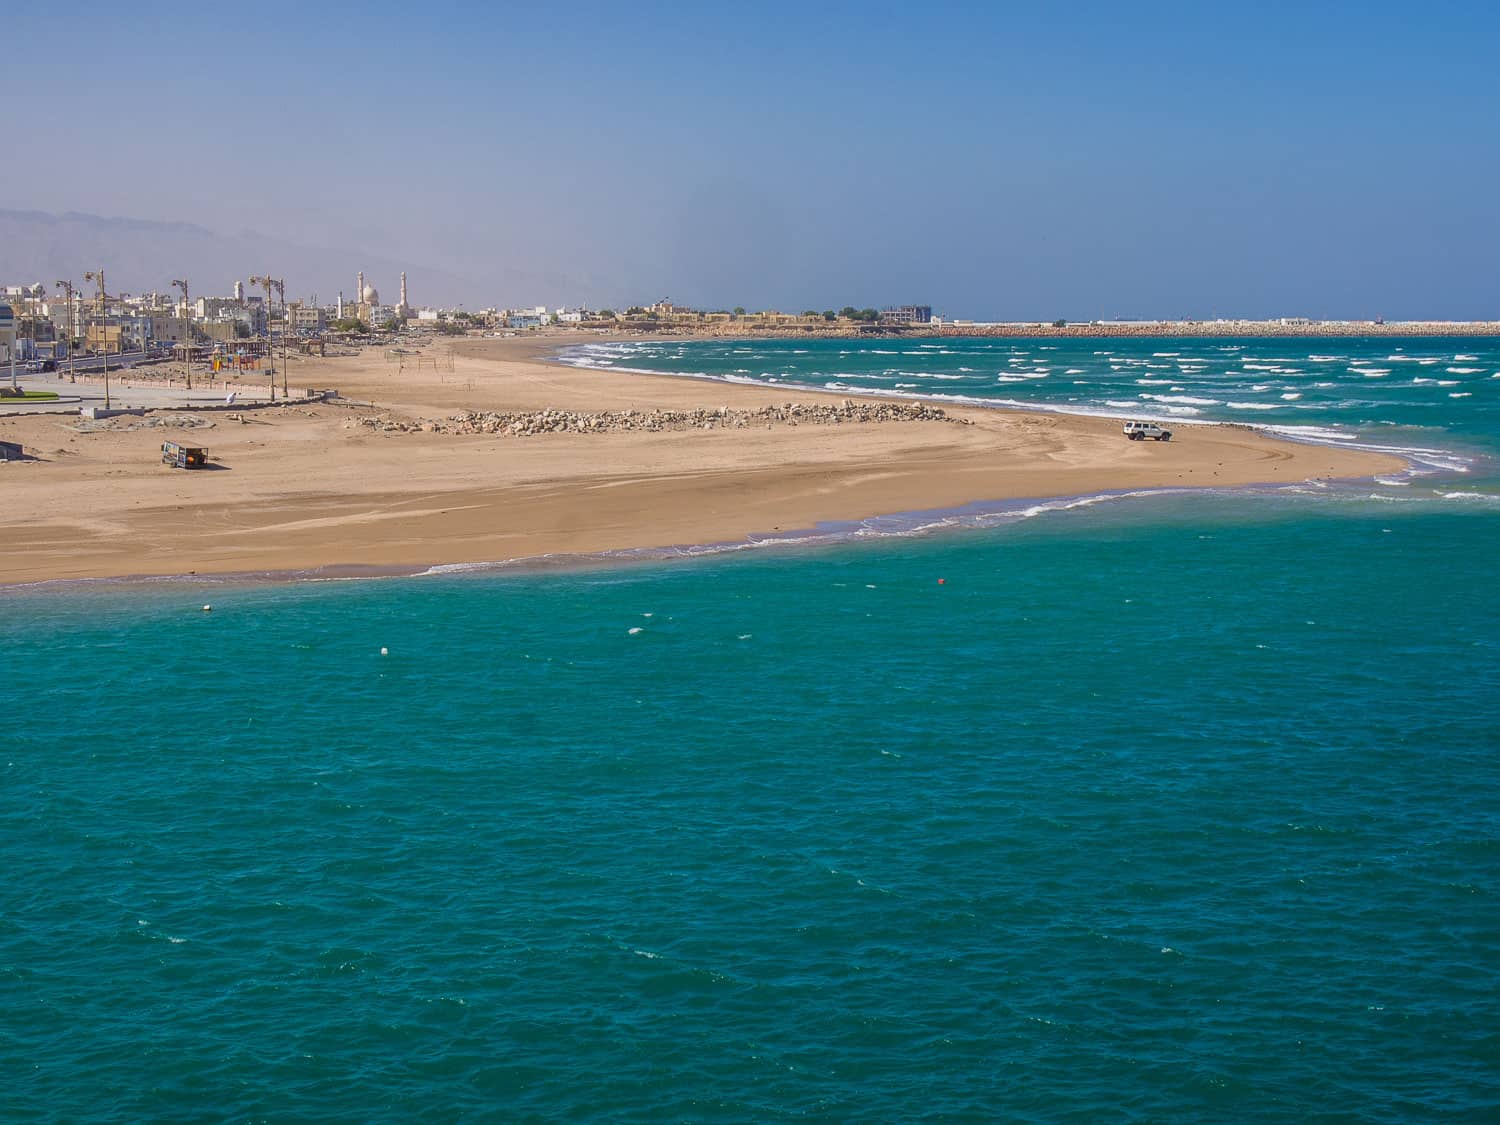 Blue waters at Sur beach, Oman